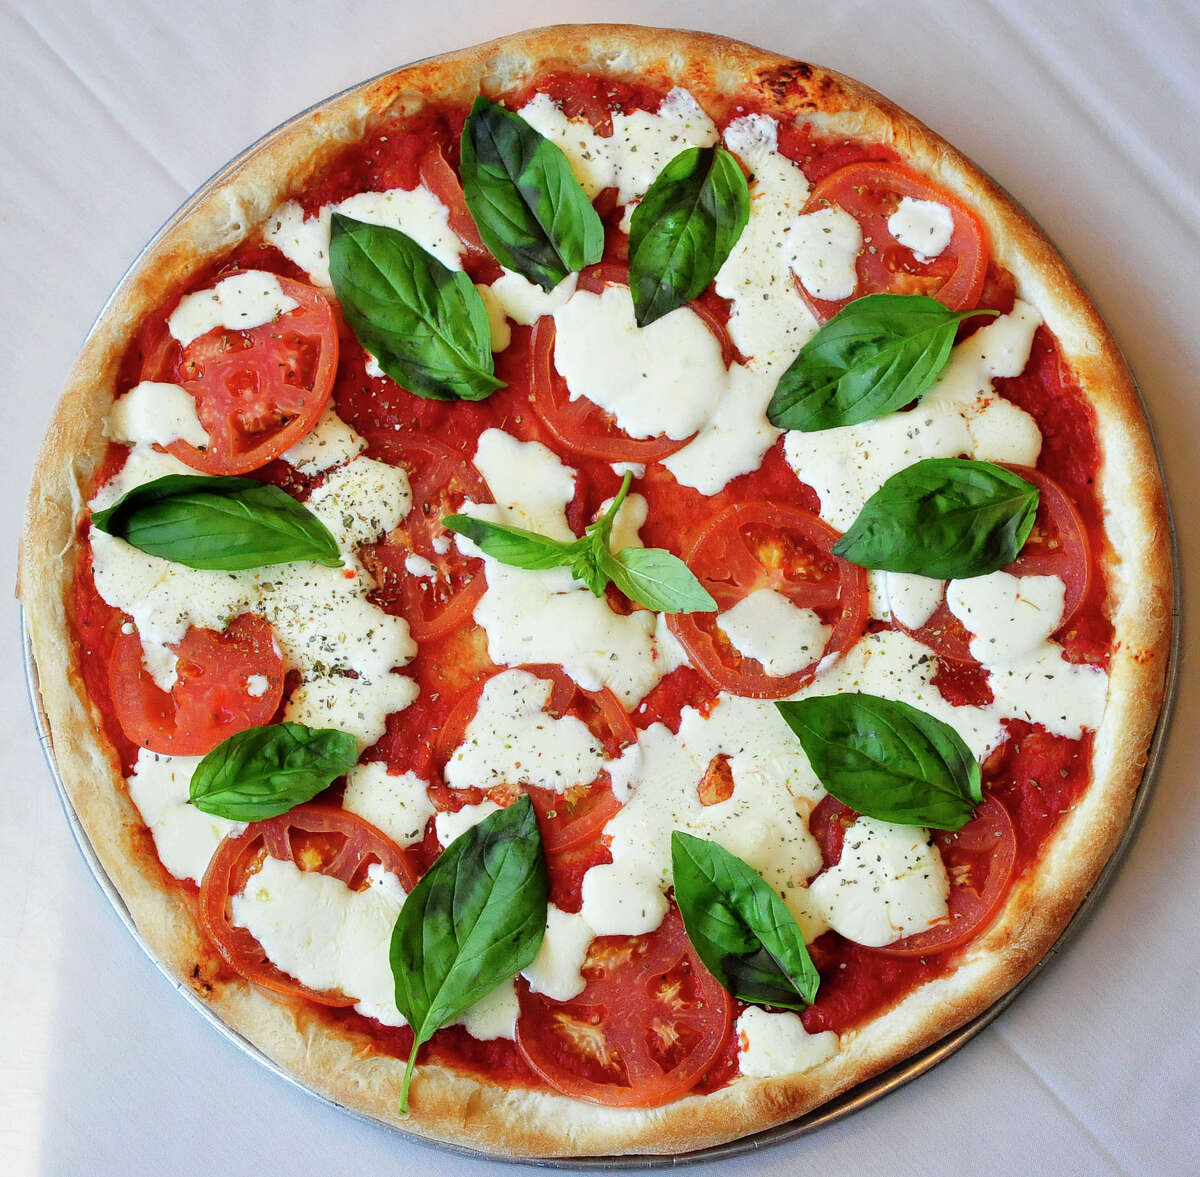 Venice Restaurant &amp; Pizza Expect classic Italian in casual setting